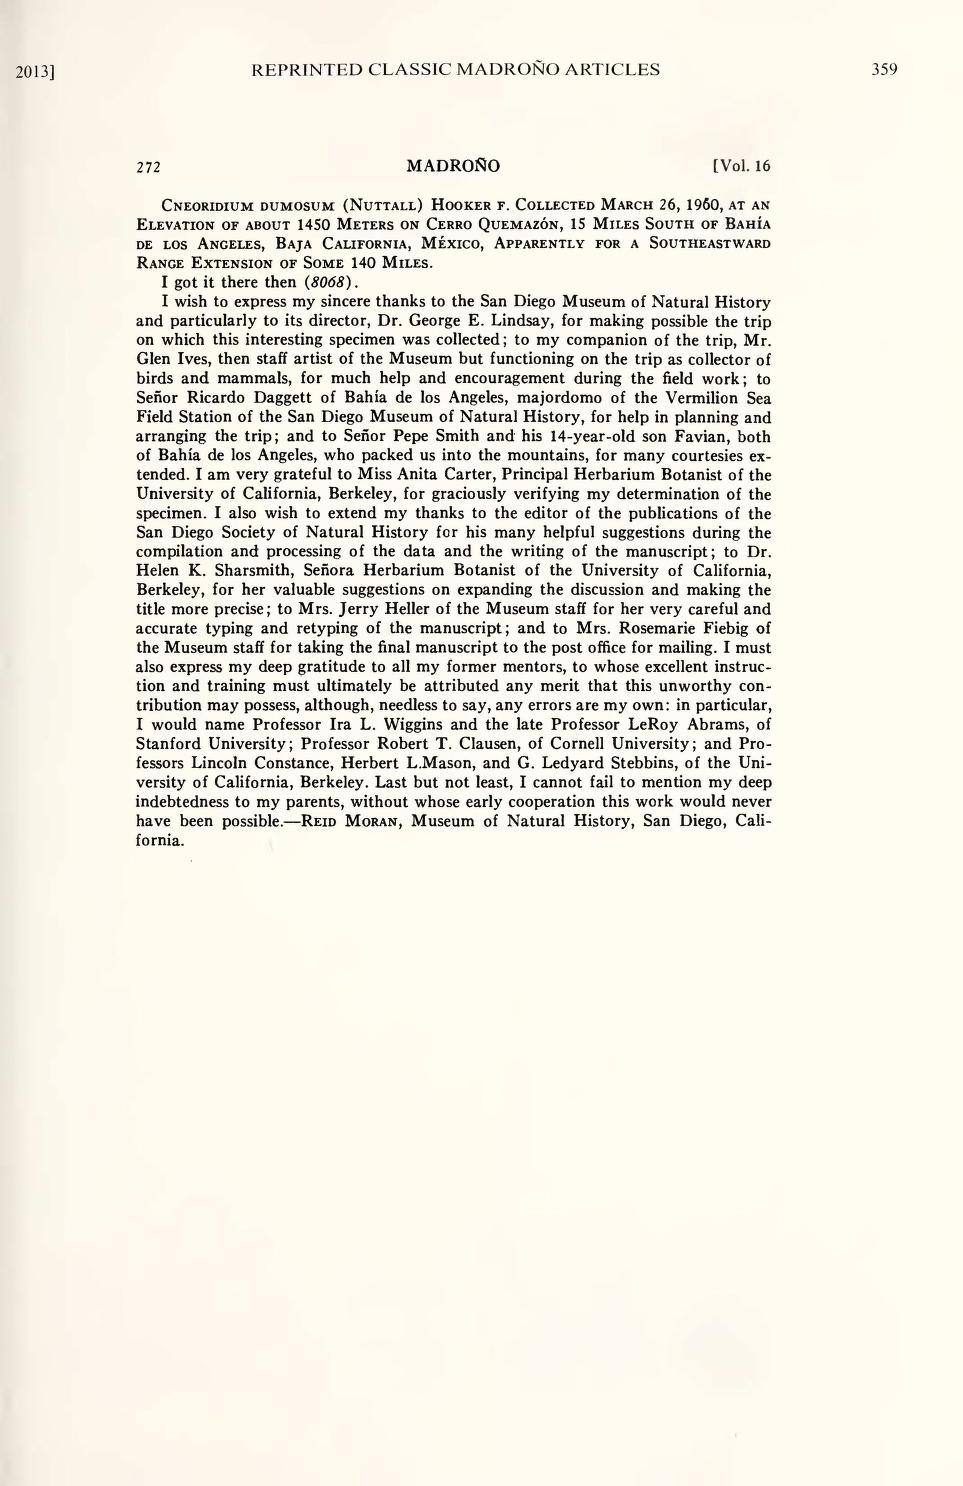 Cneoridium dumosum (Nuttall) Hooker F. Collected March 26, 1960 